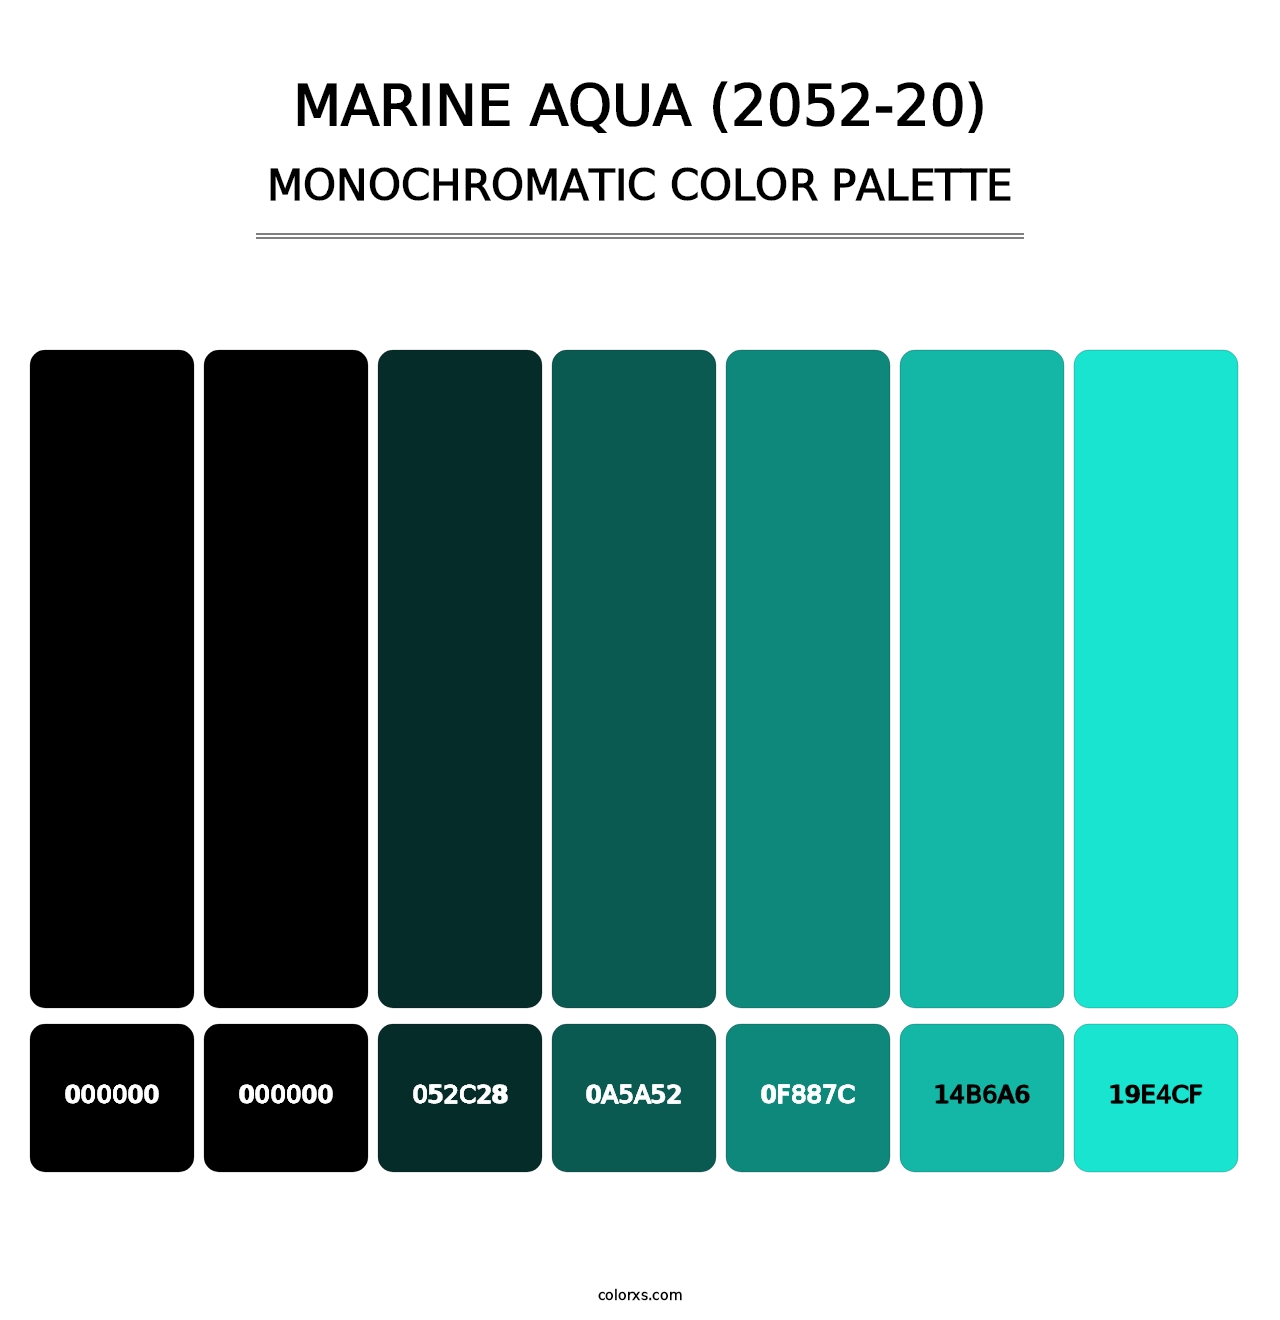 Marine Aqua (2052-20) - Monochromatic Color Palette